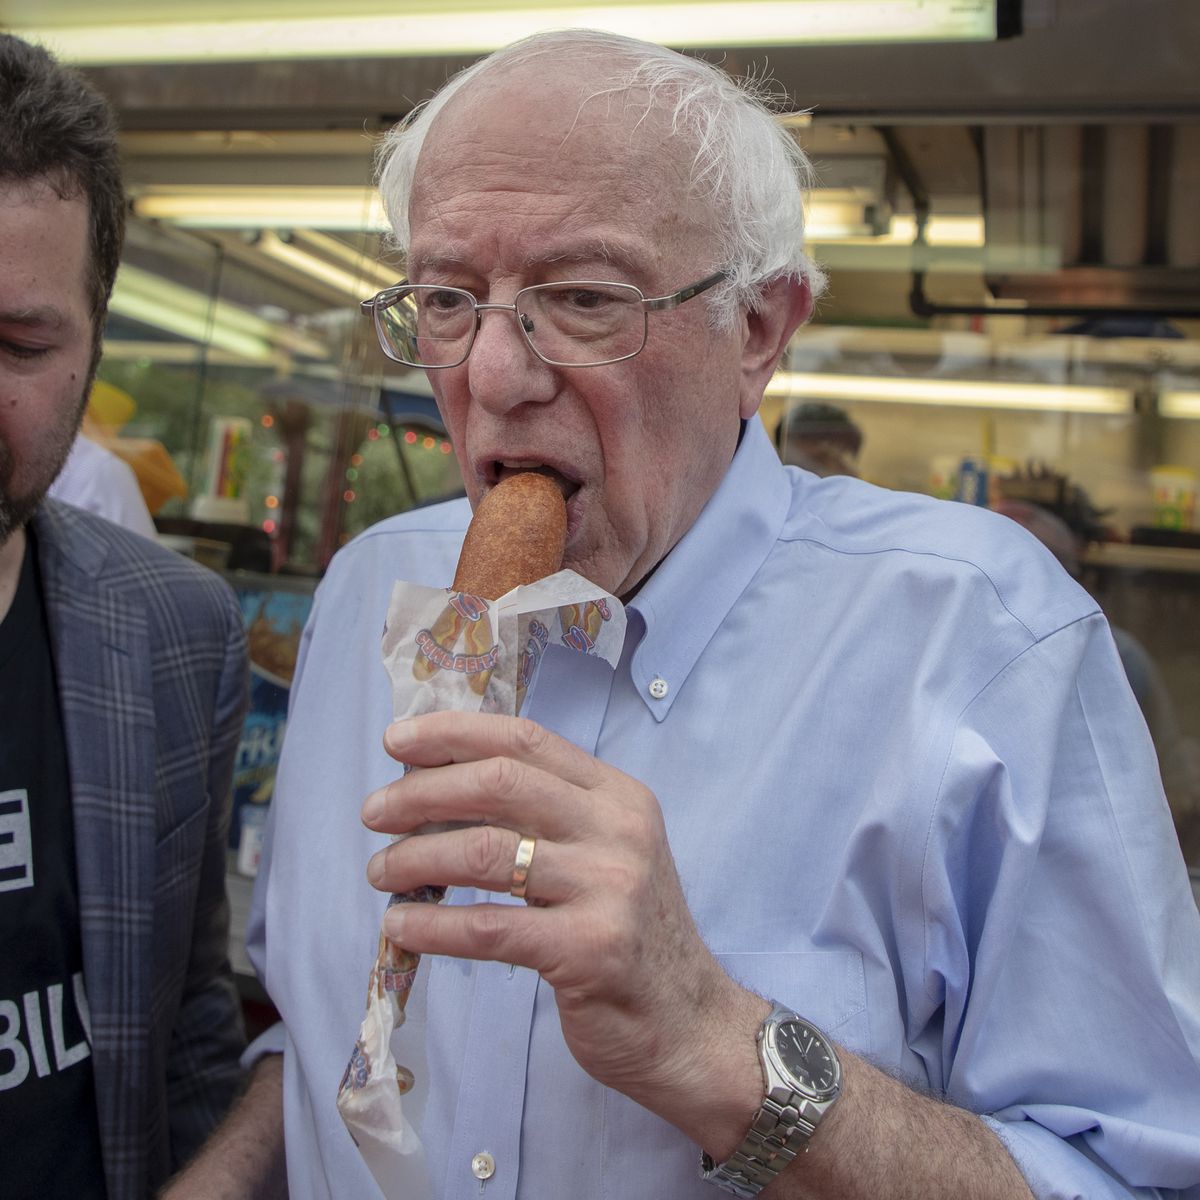 Presidential candidate Bernie Sanders takes a bite of a corn dog